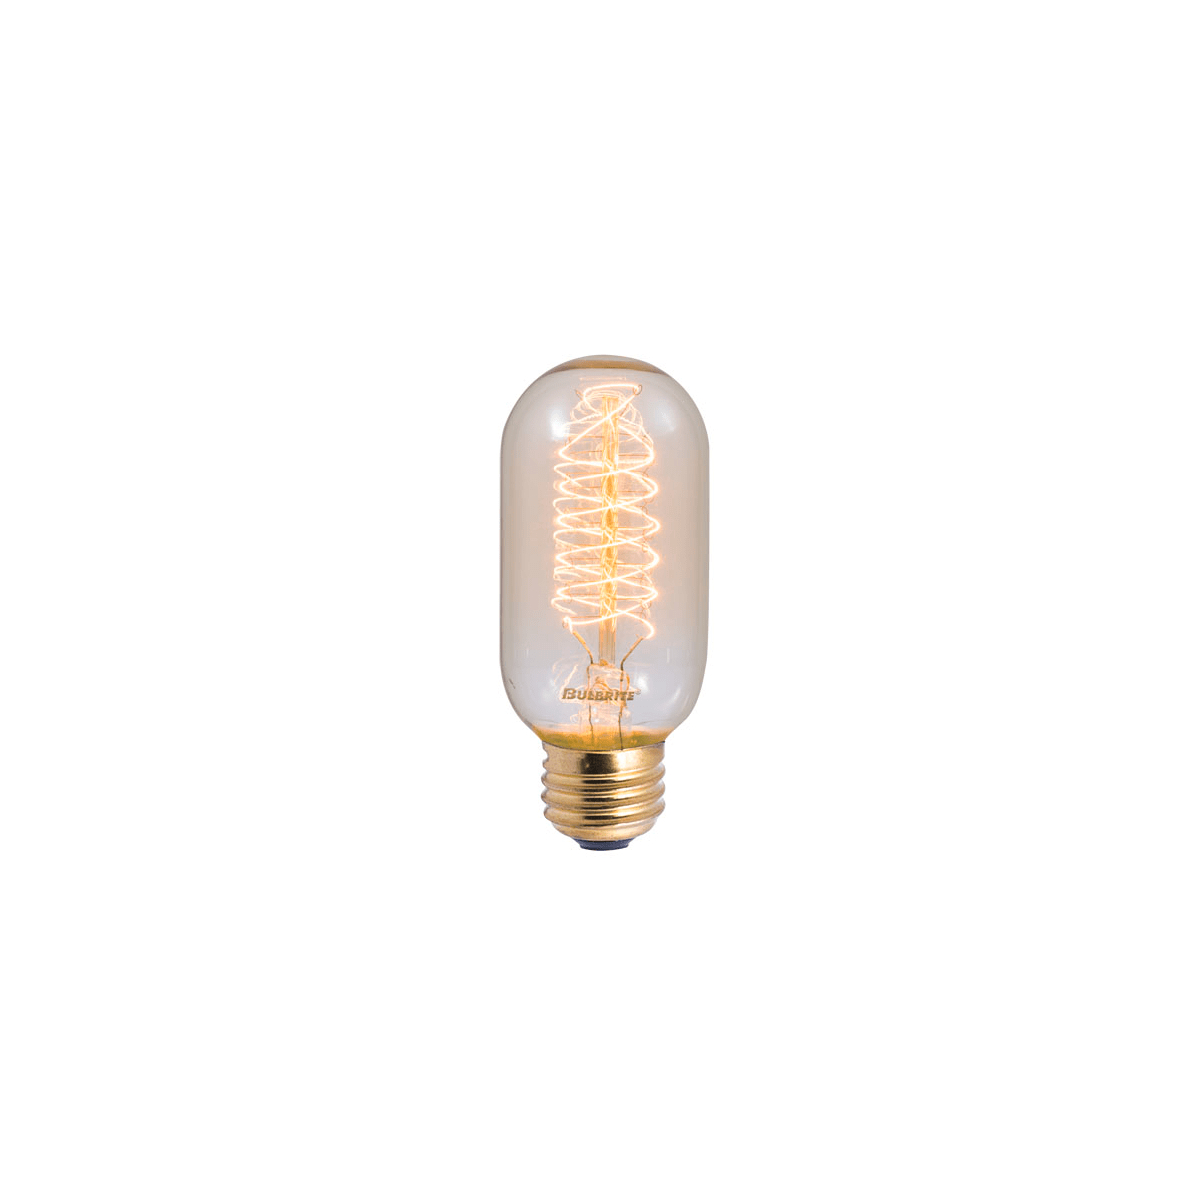 How Many Lumens Is A 40 Watt Incandescent Bulb